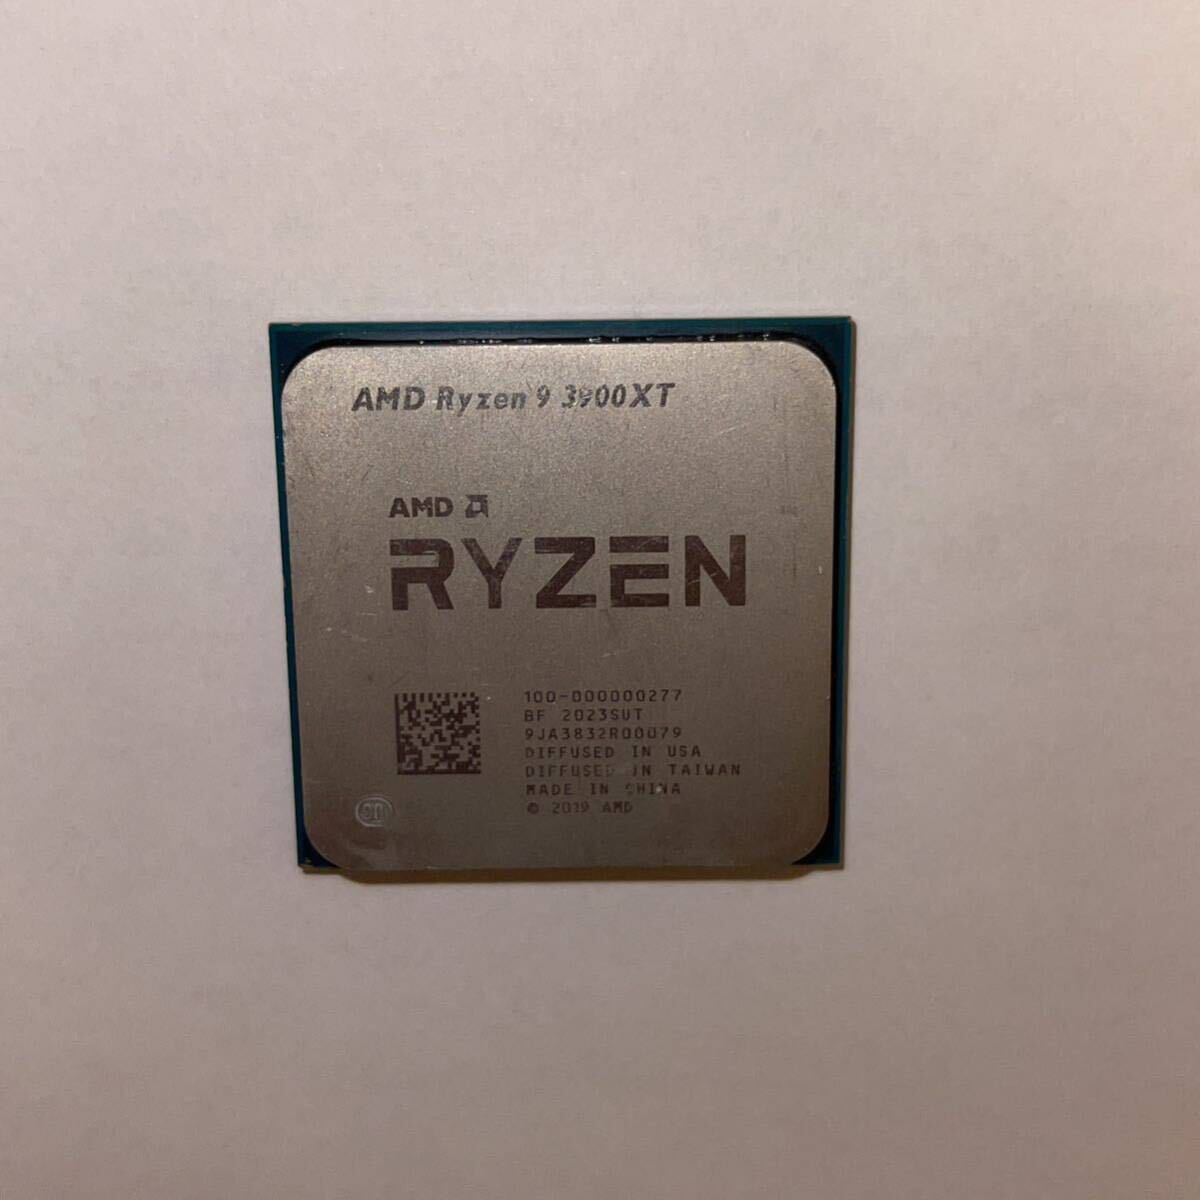 AMD Ryzen 9 3900XT operation not yet verification Junk 